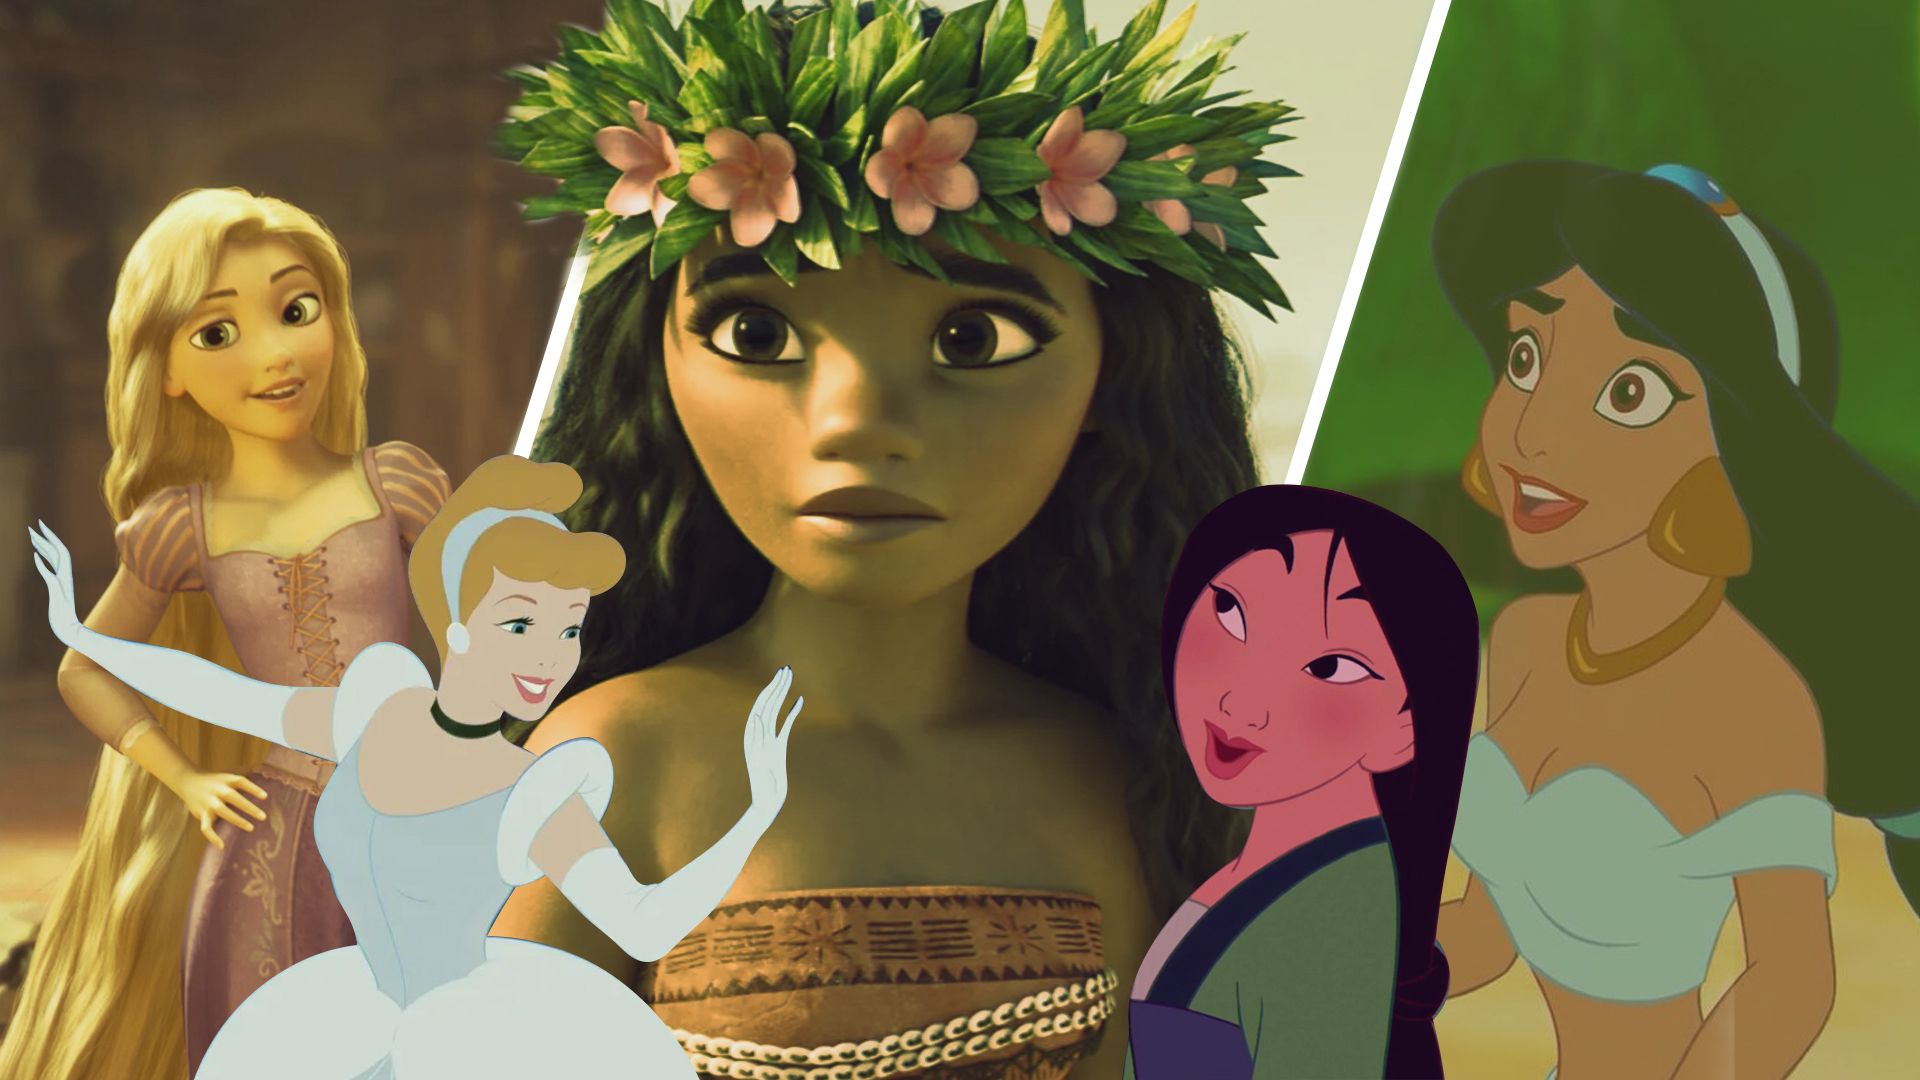 An edited image of different Disney princesses, including Moana, Rapunzel, Cinderella, Mulan, and Jasmine